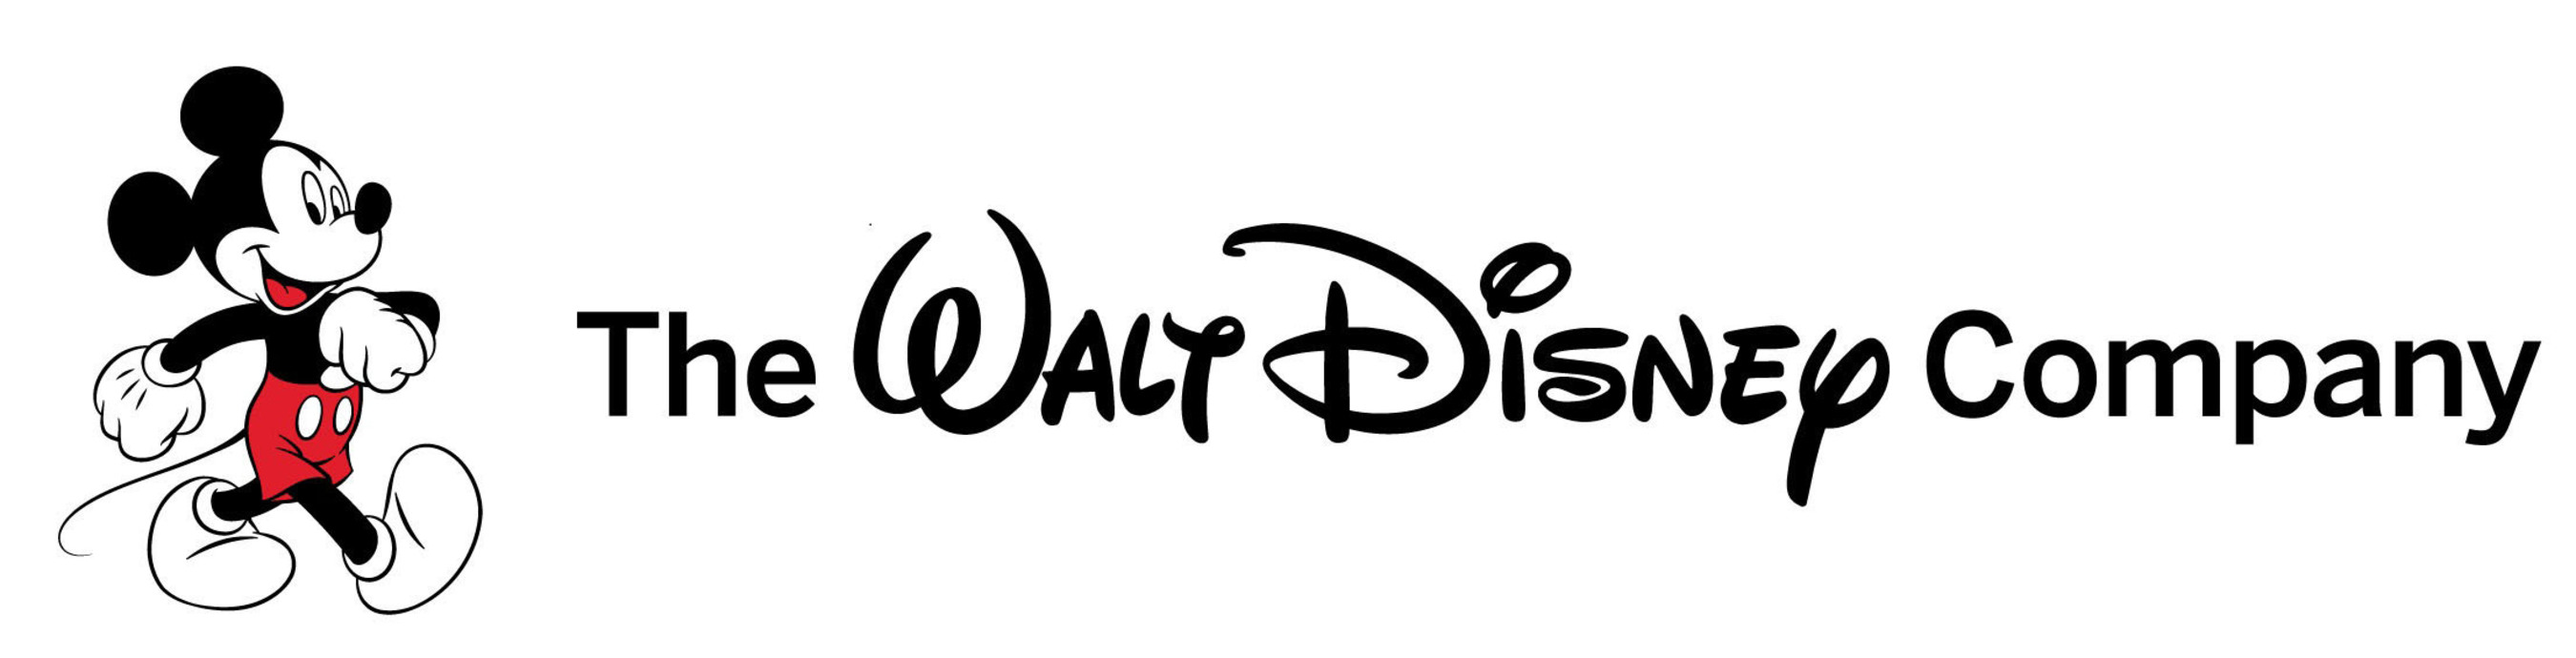 The Walt Disney Co. logo. (PRNewsFoto/Netflix, Inc.) (PRNewsFoto/NETFLIX, INC.)